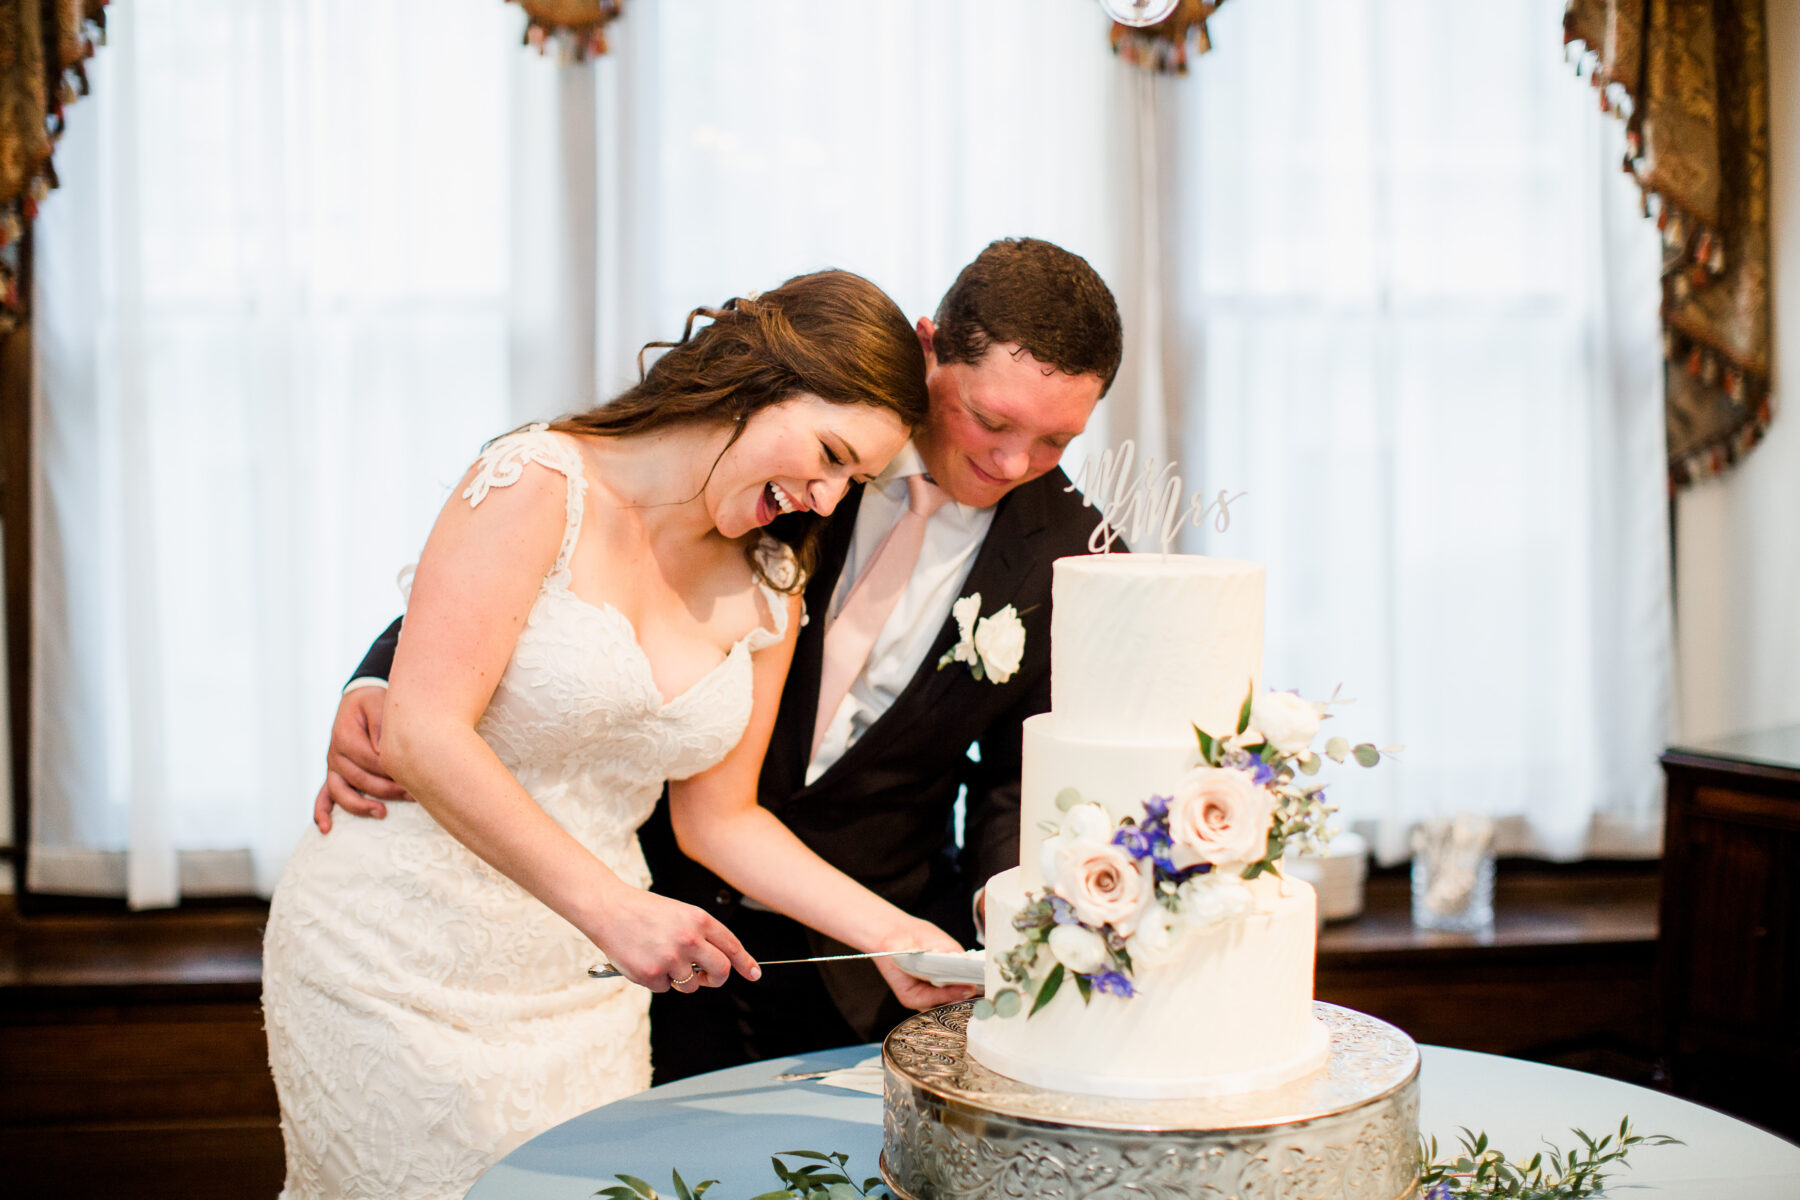 White floral wedding cake cutting | Nashville Bride Guide